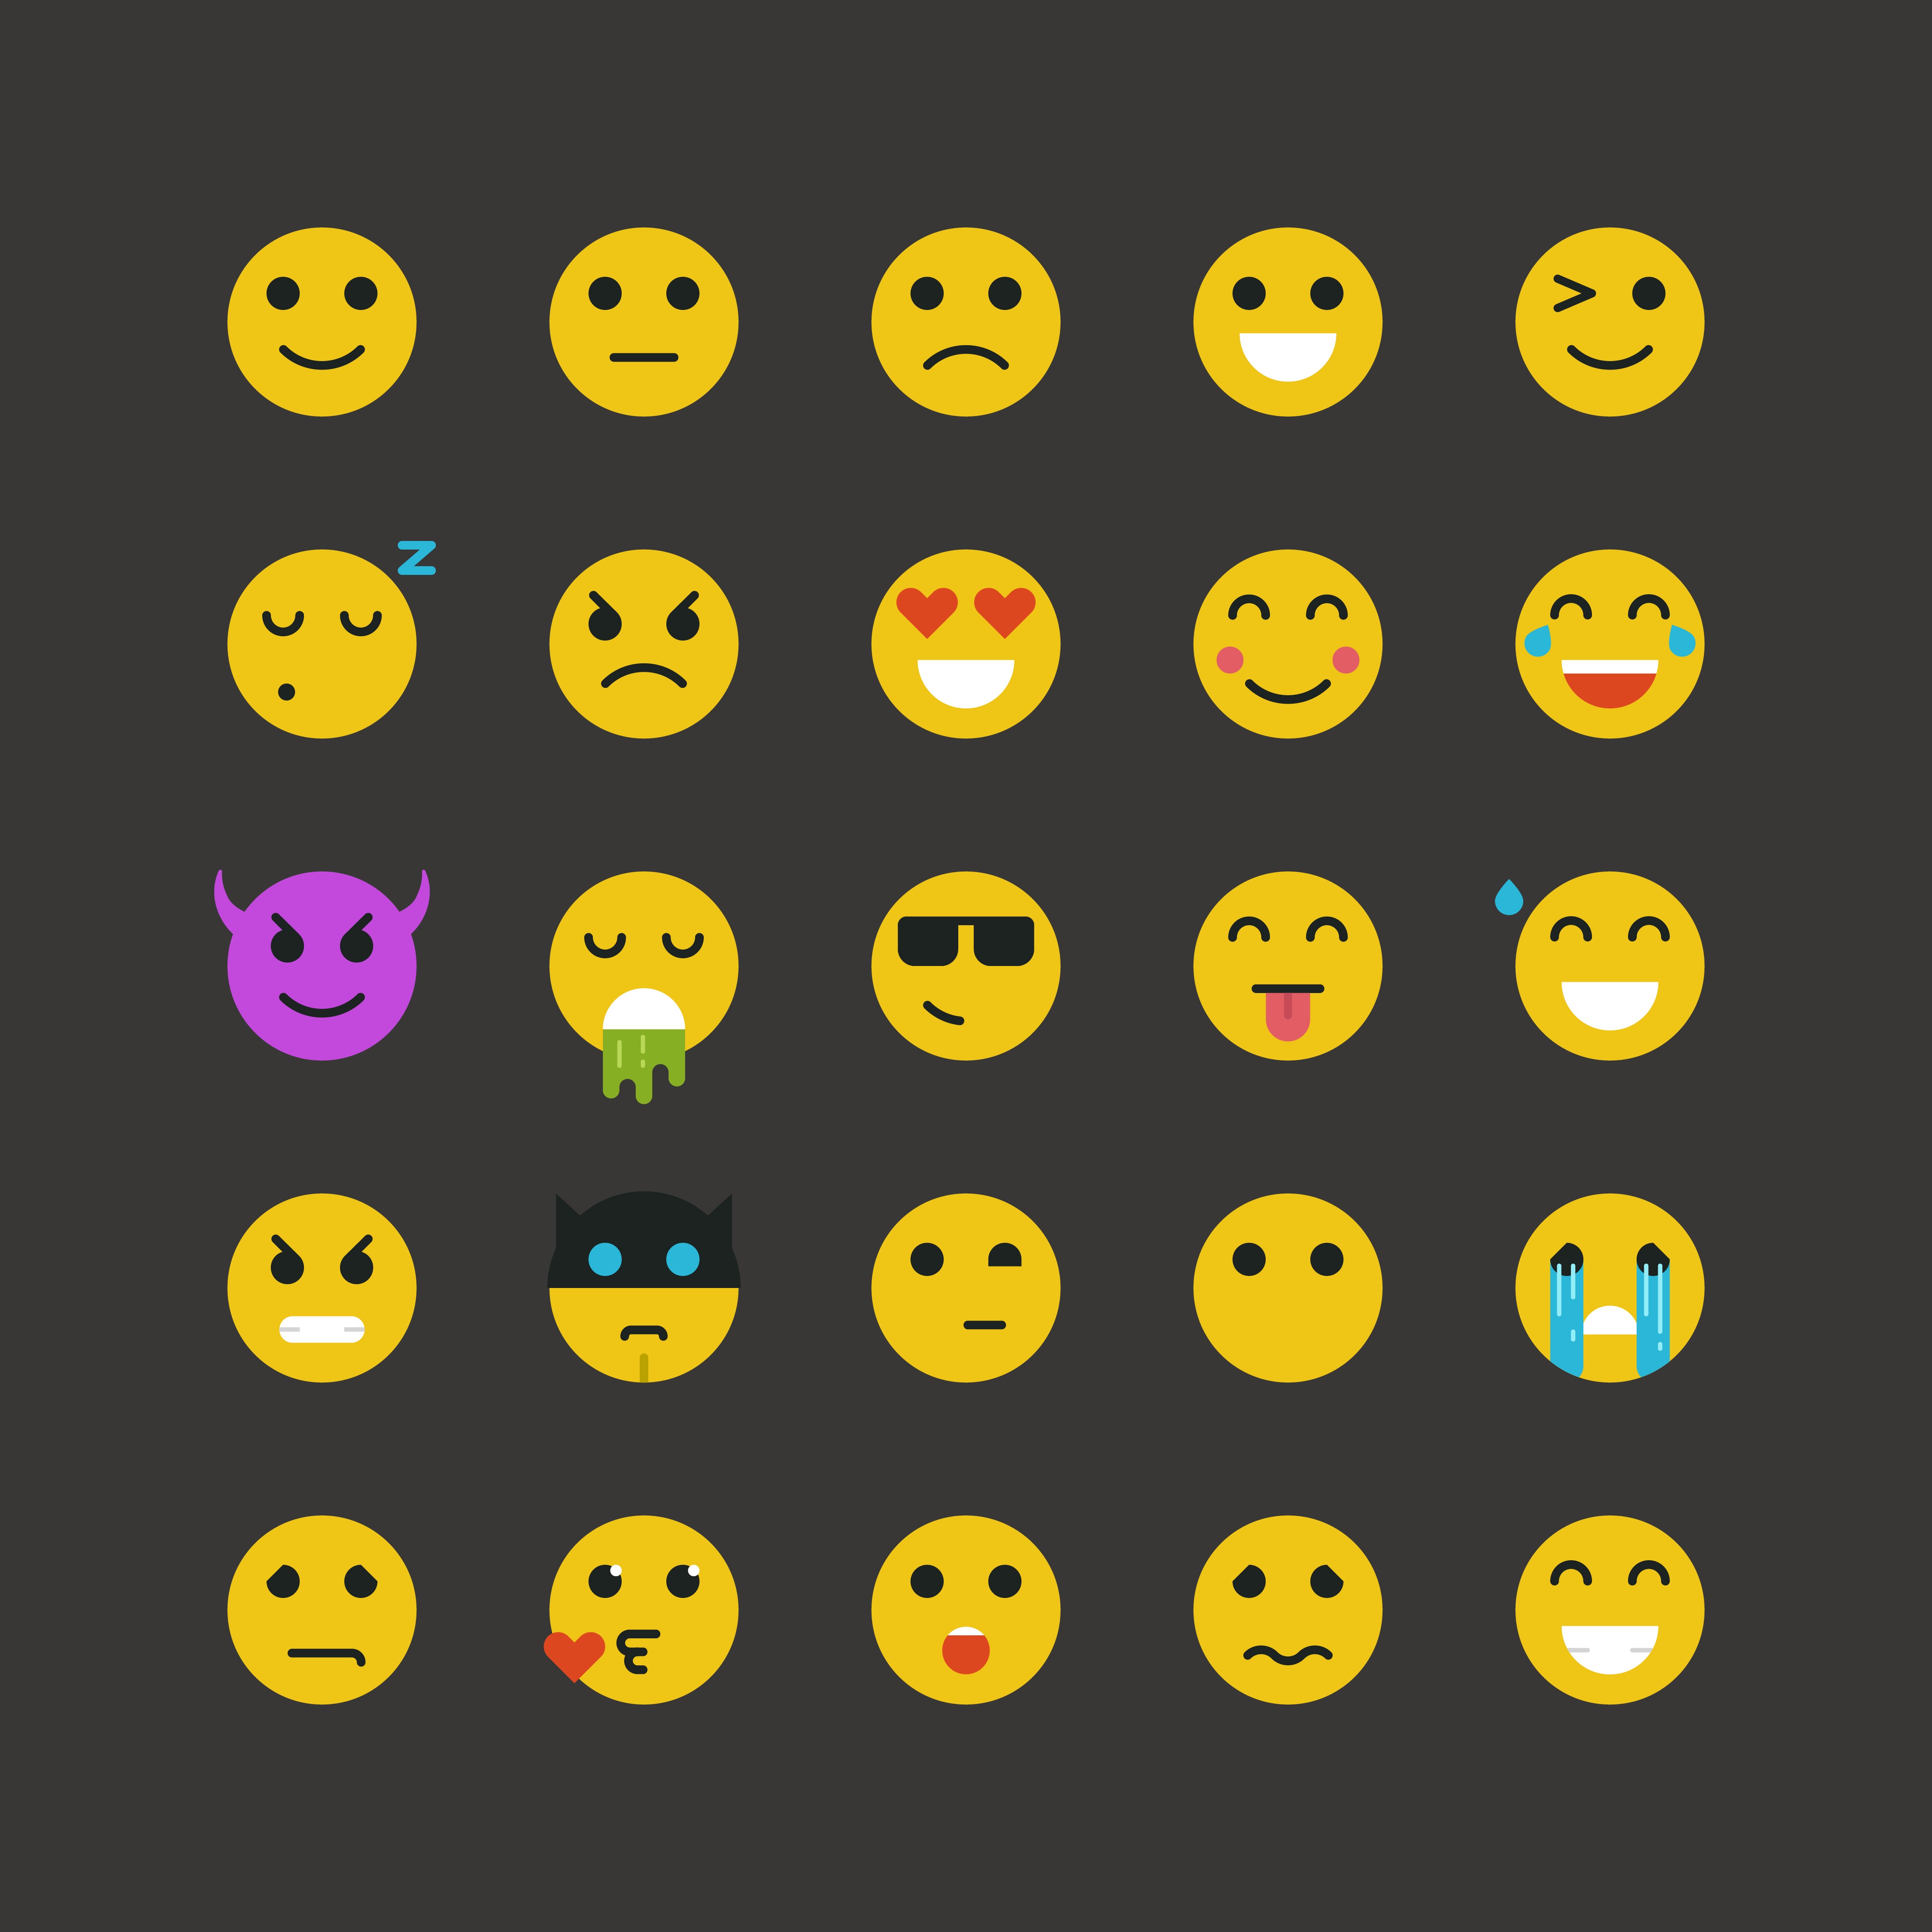 Emoji Recognition Chart